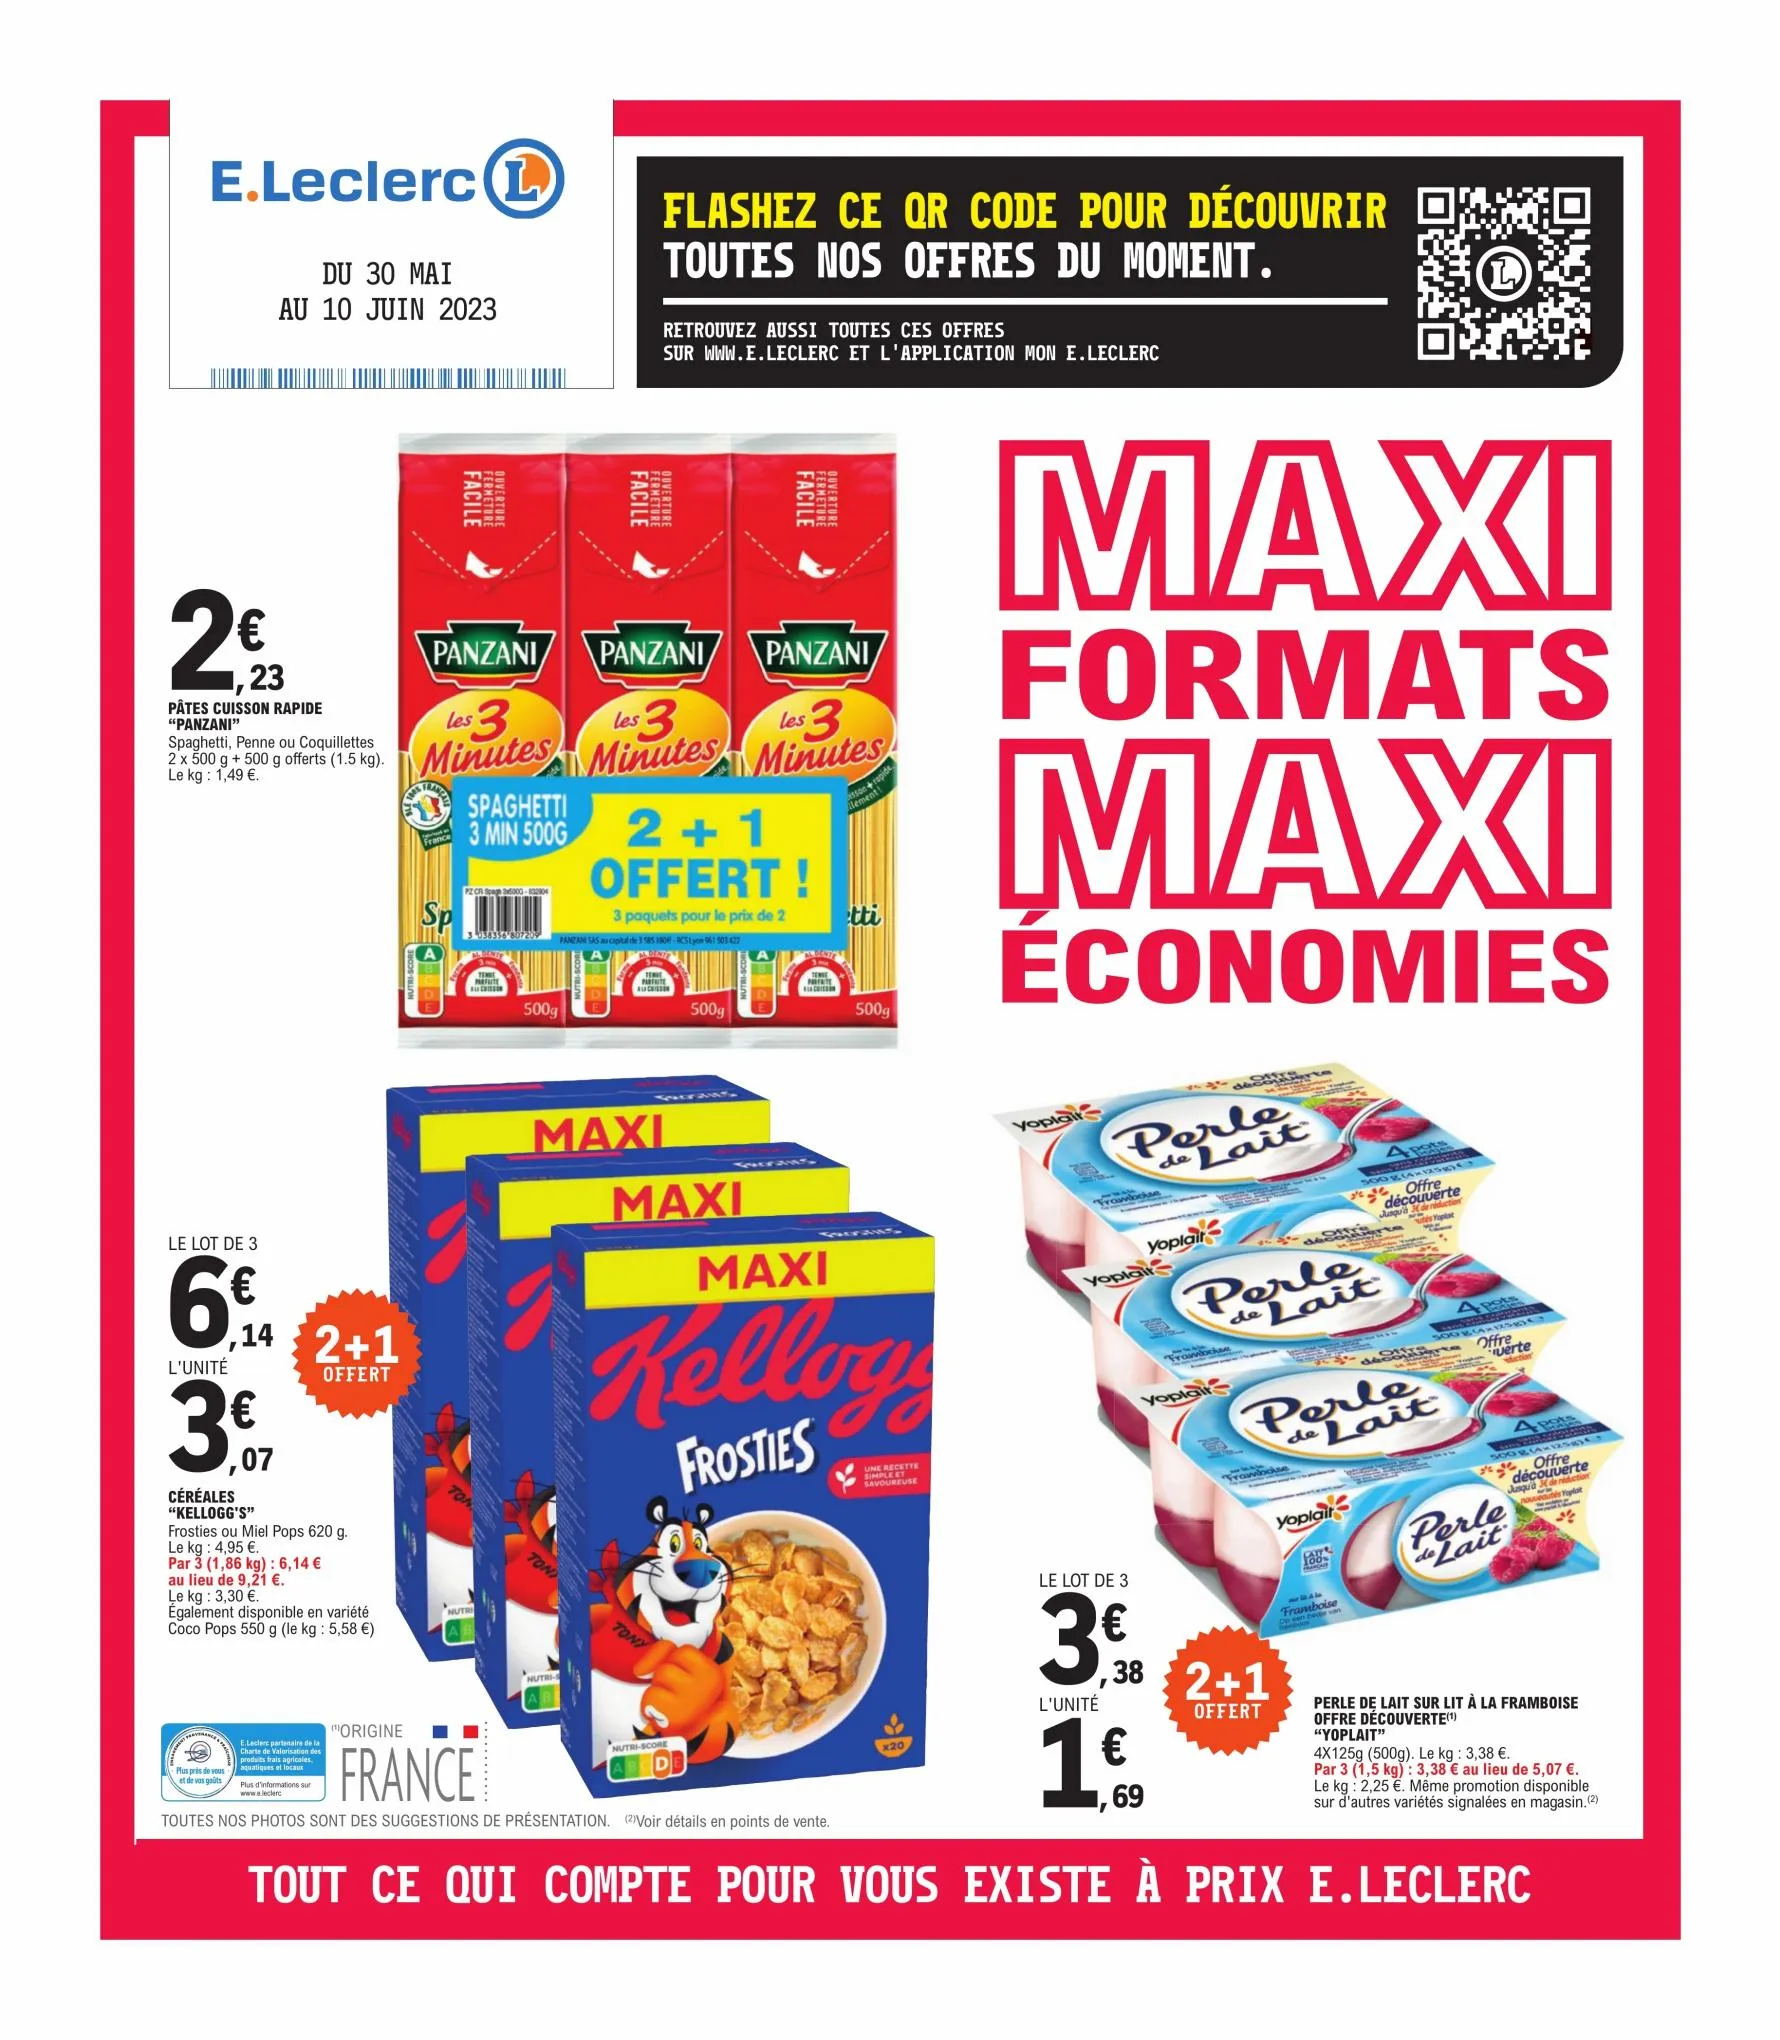 Catalogue Maxi formats maxi economies, page 00001